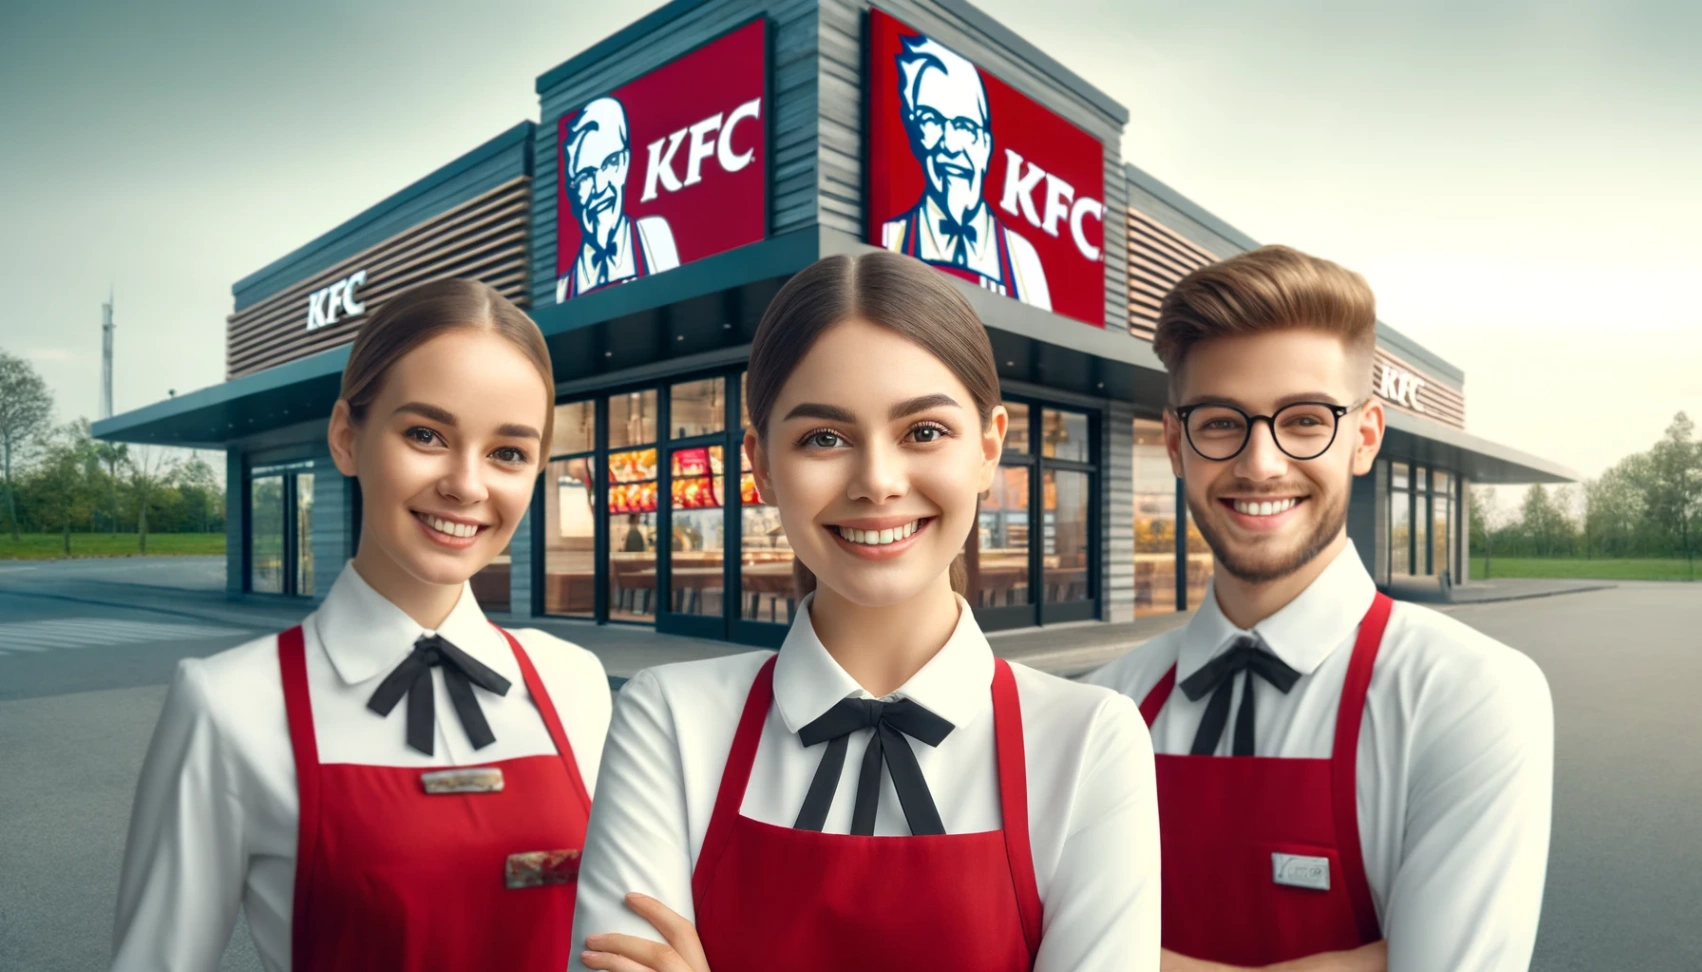 KFC - למדו כיצד להגיש מועמדות למשרות